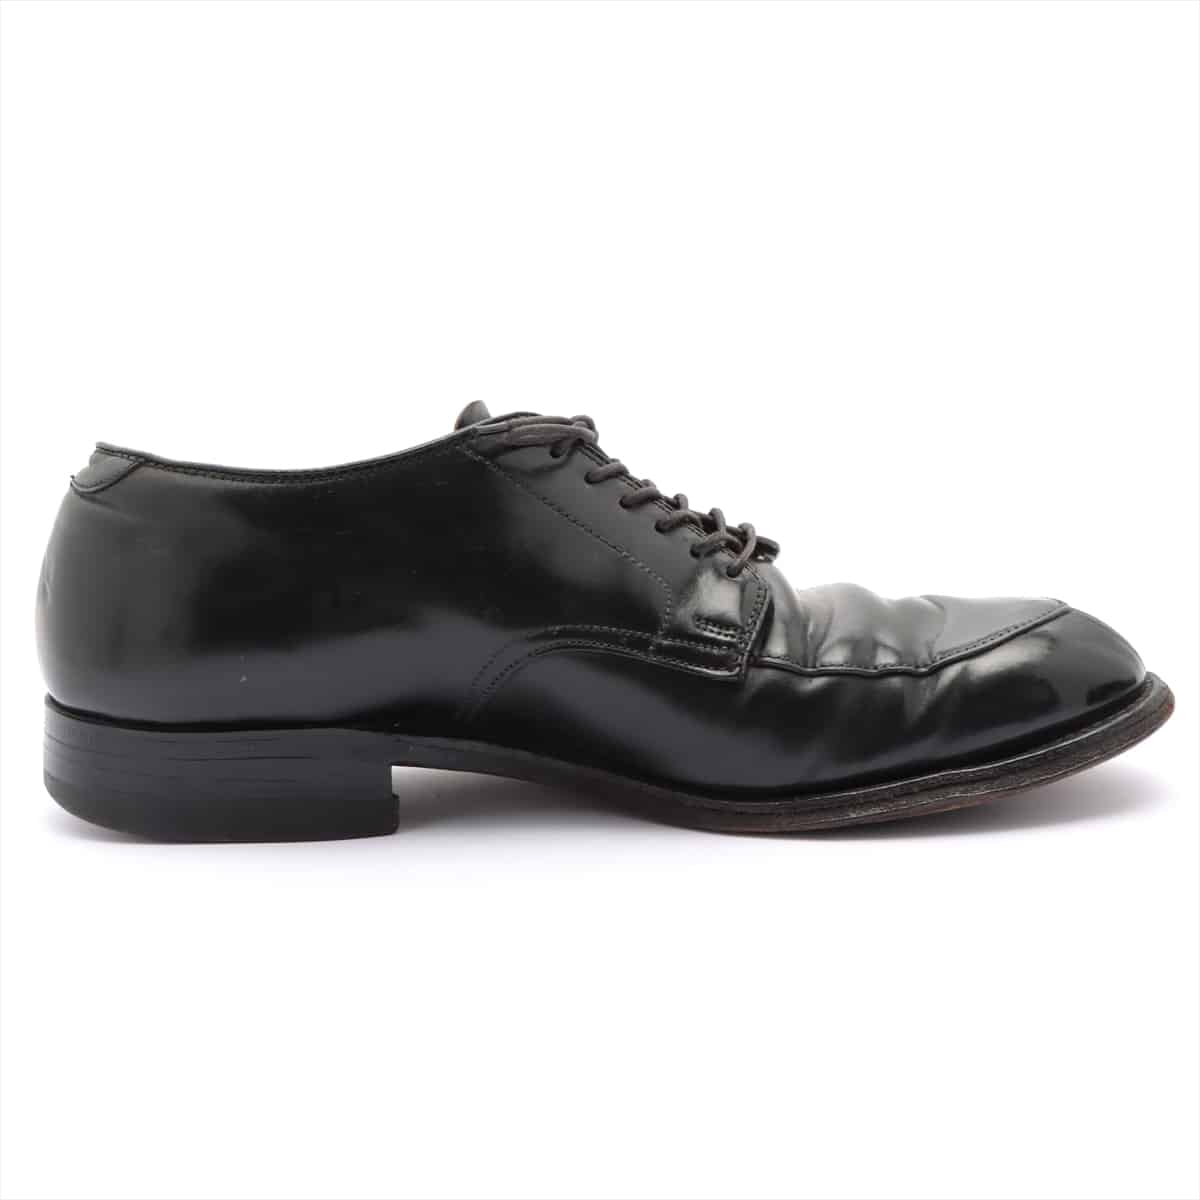 Alden Cordovan Leather shoes 6 Men's Black 54331 Resoled